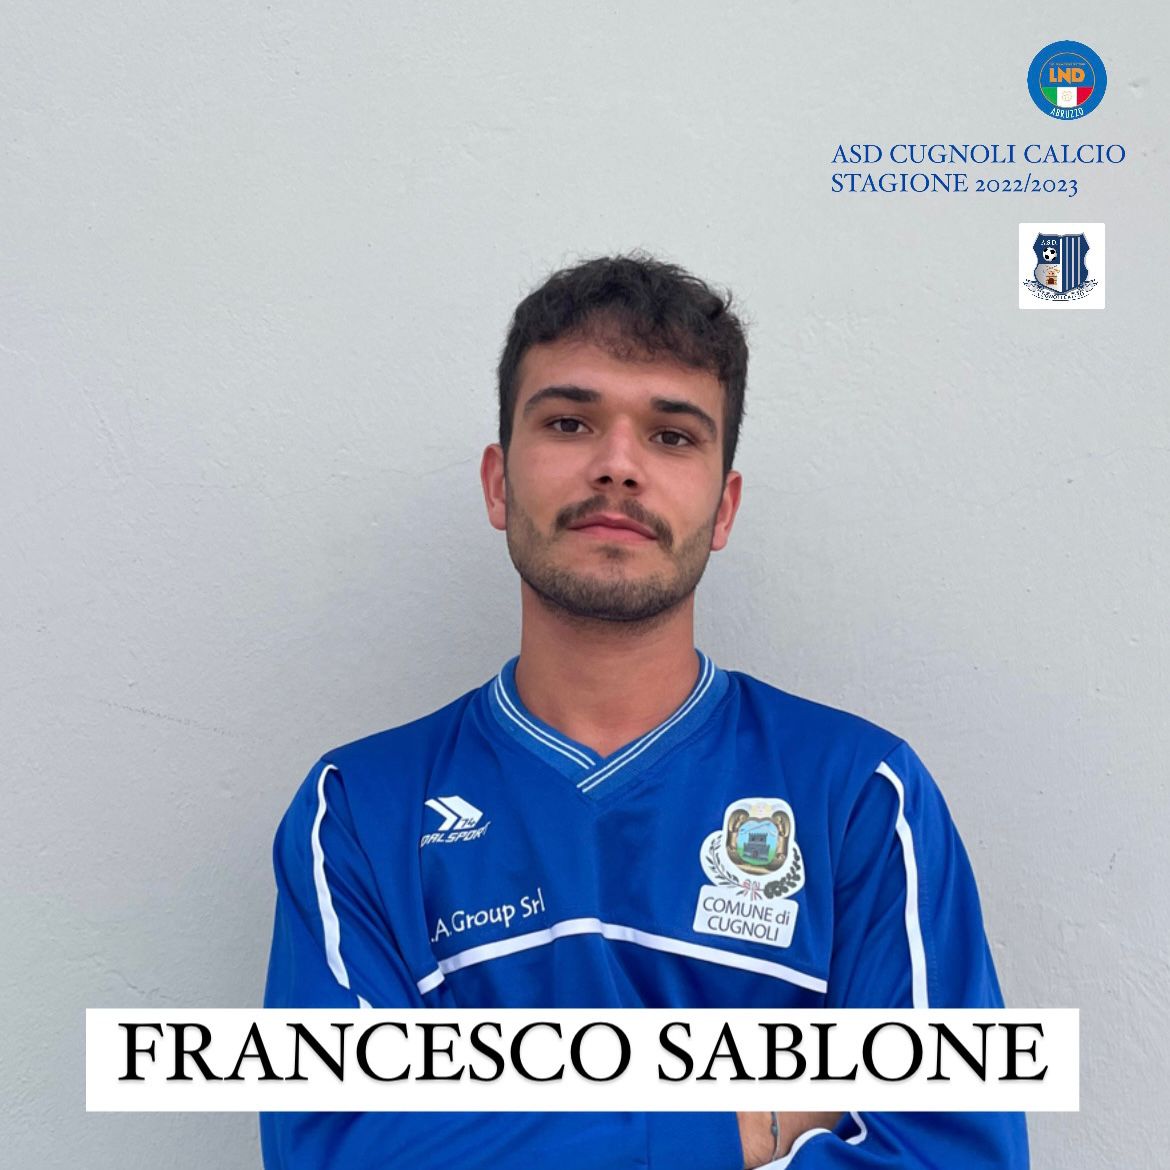 Francesco Sablone